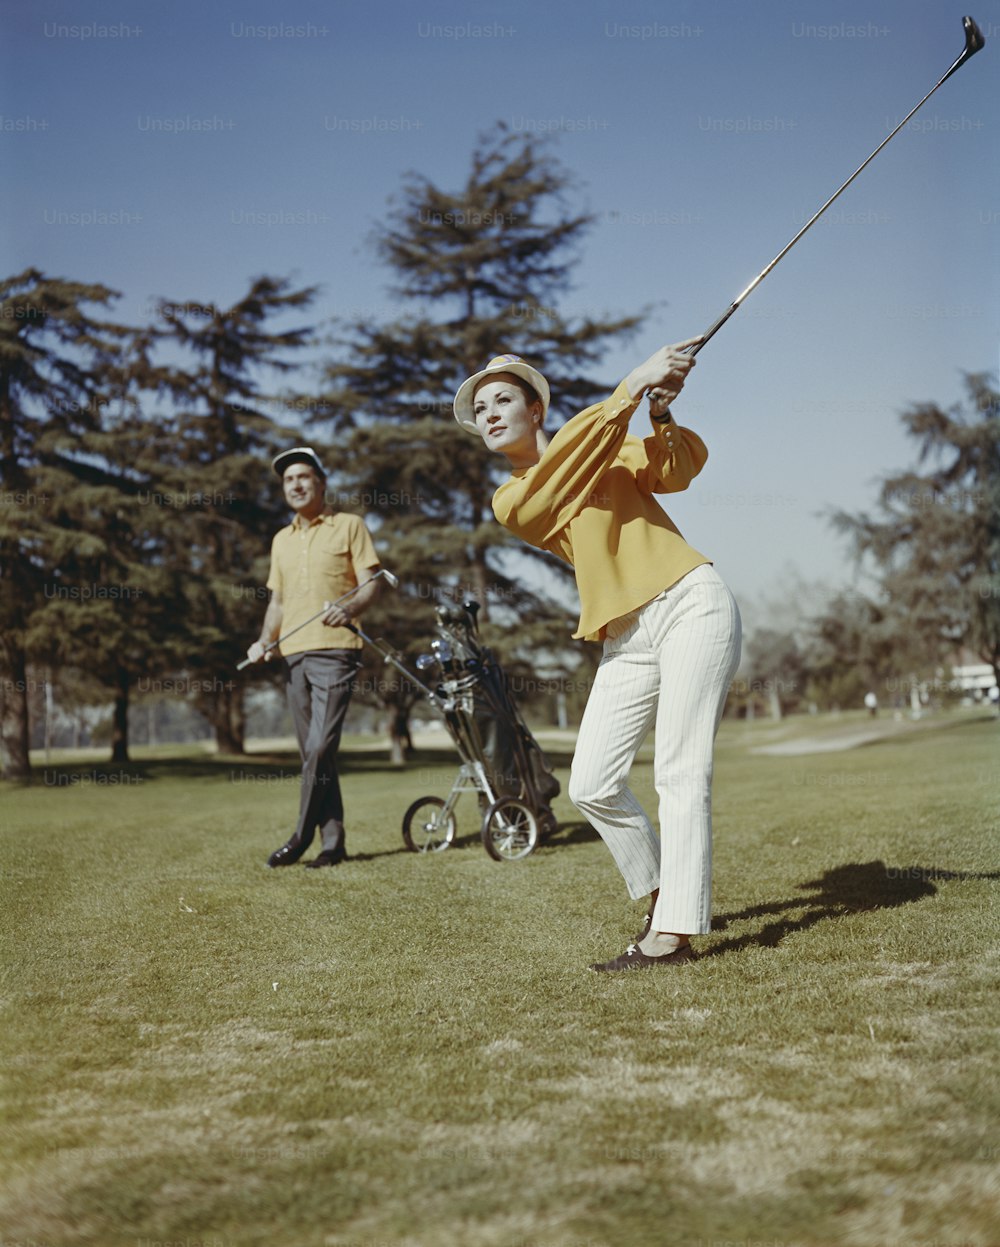 Un hombre balanceando un palo de golf en un campo